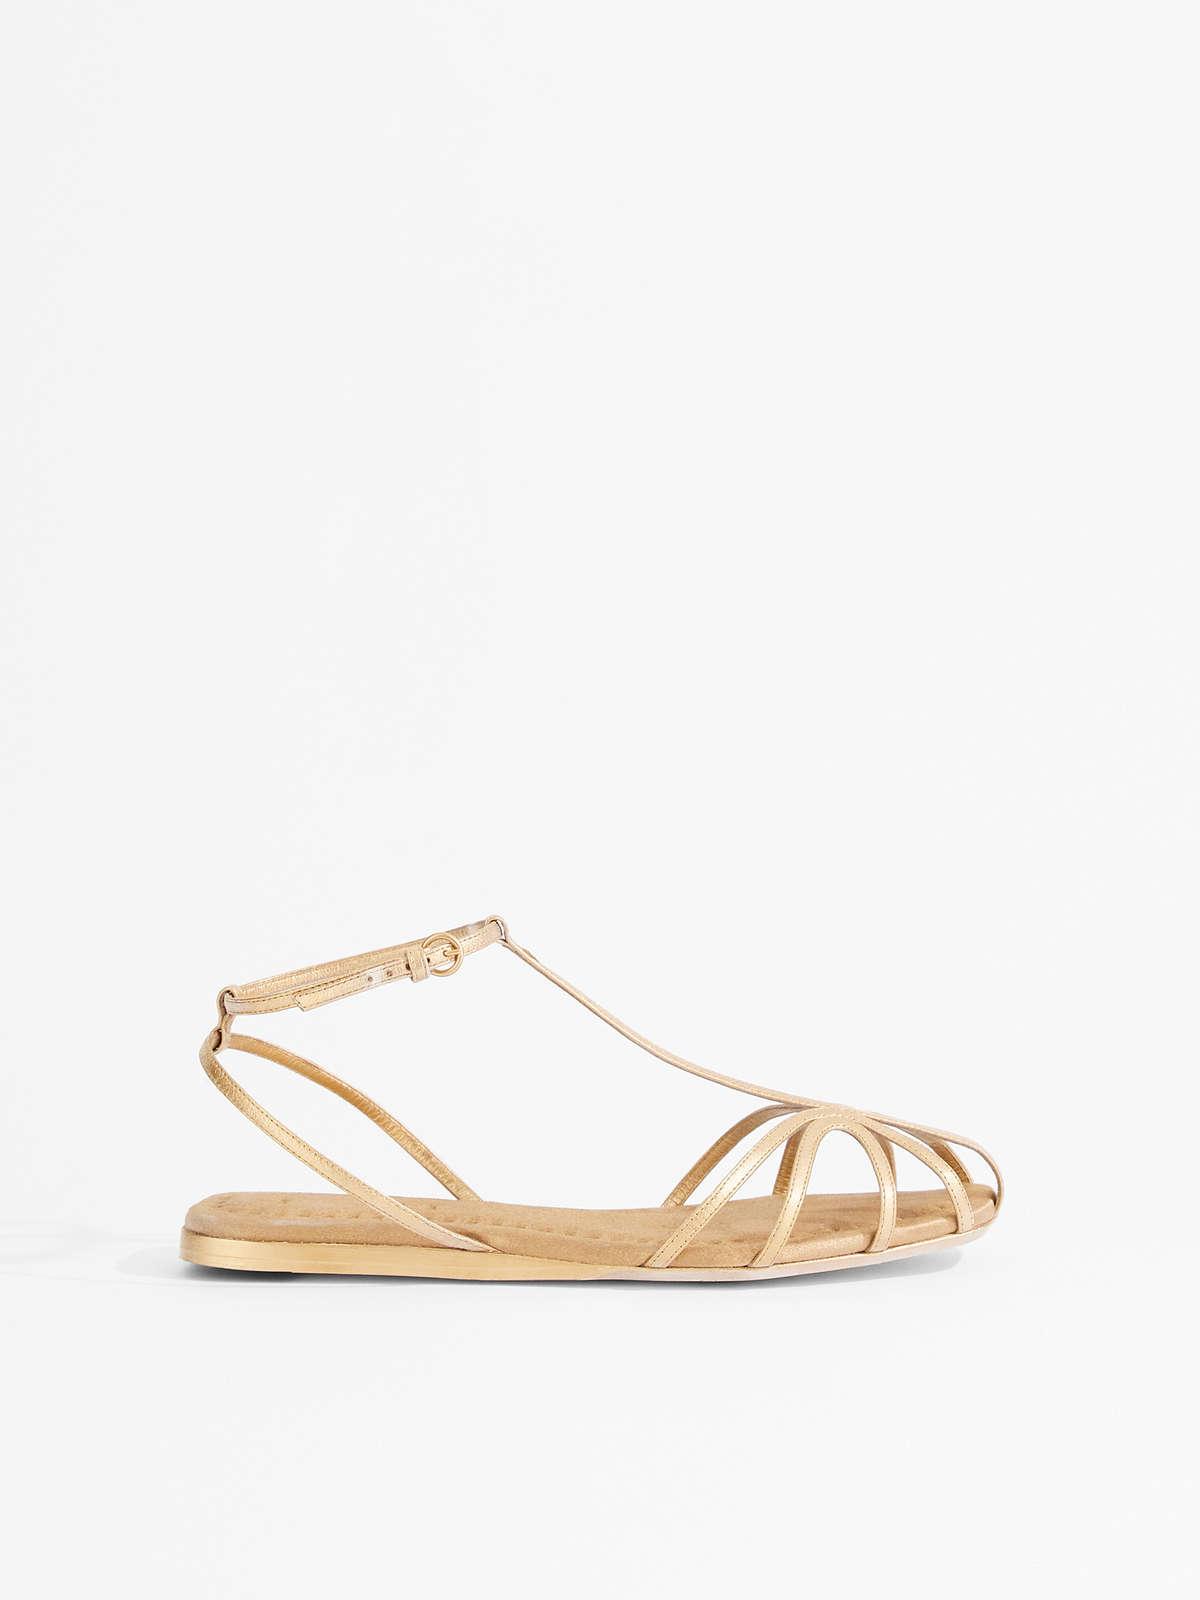 Womens Max Mara Flat Shoes | Laminated Nappa Leather Sandals Light Gold